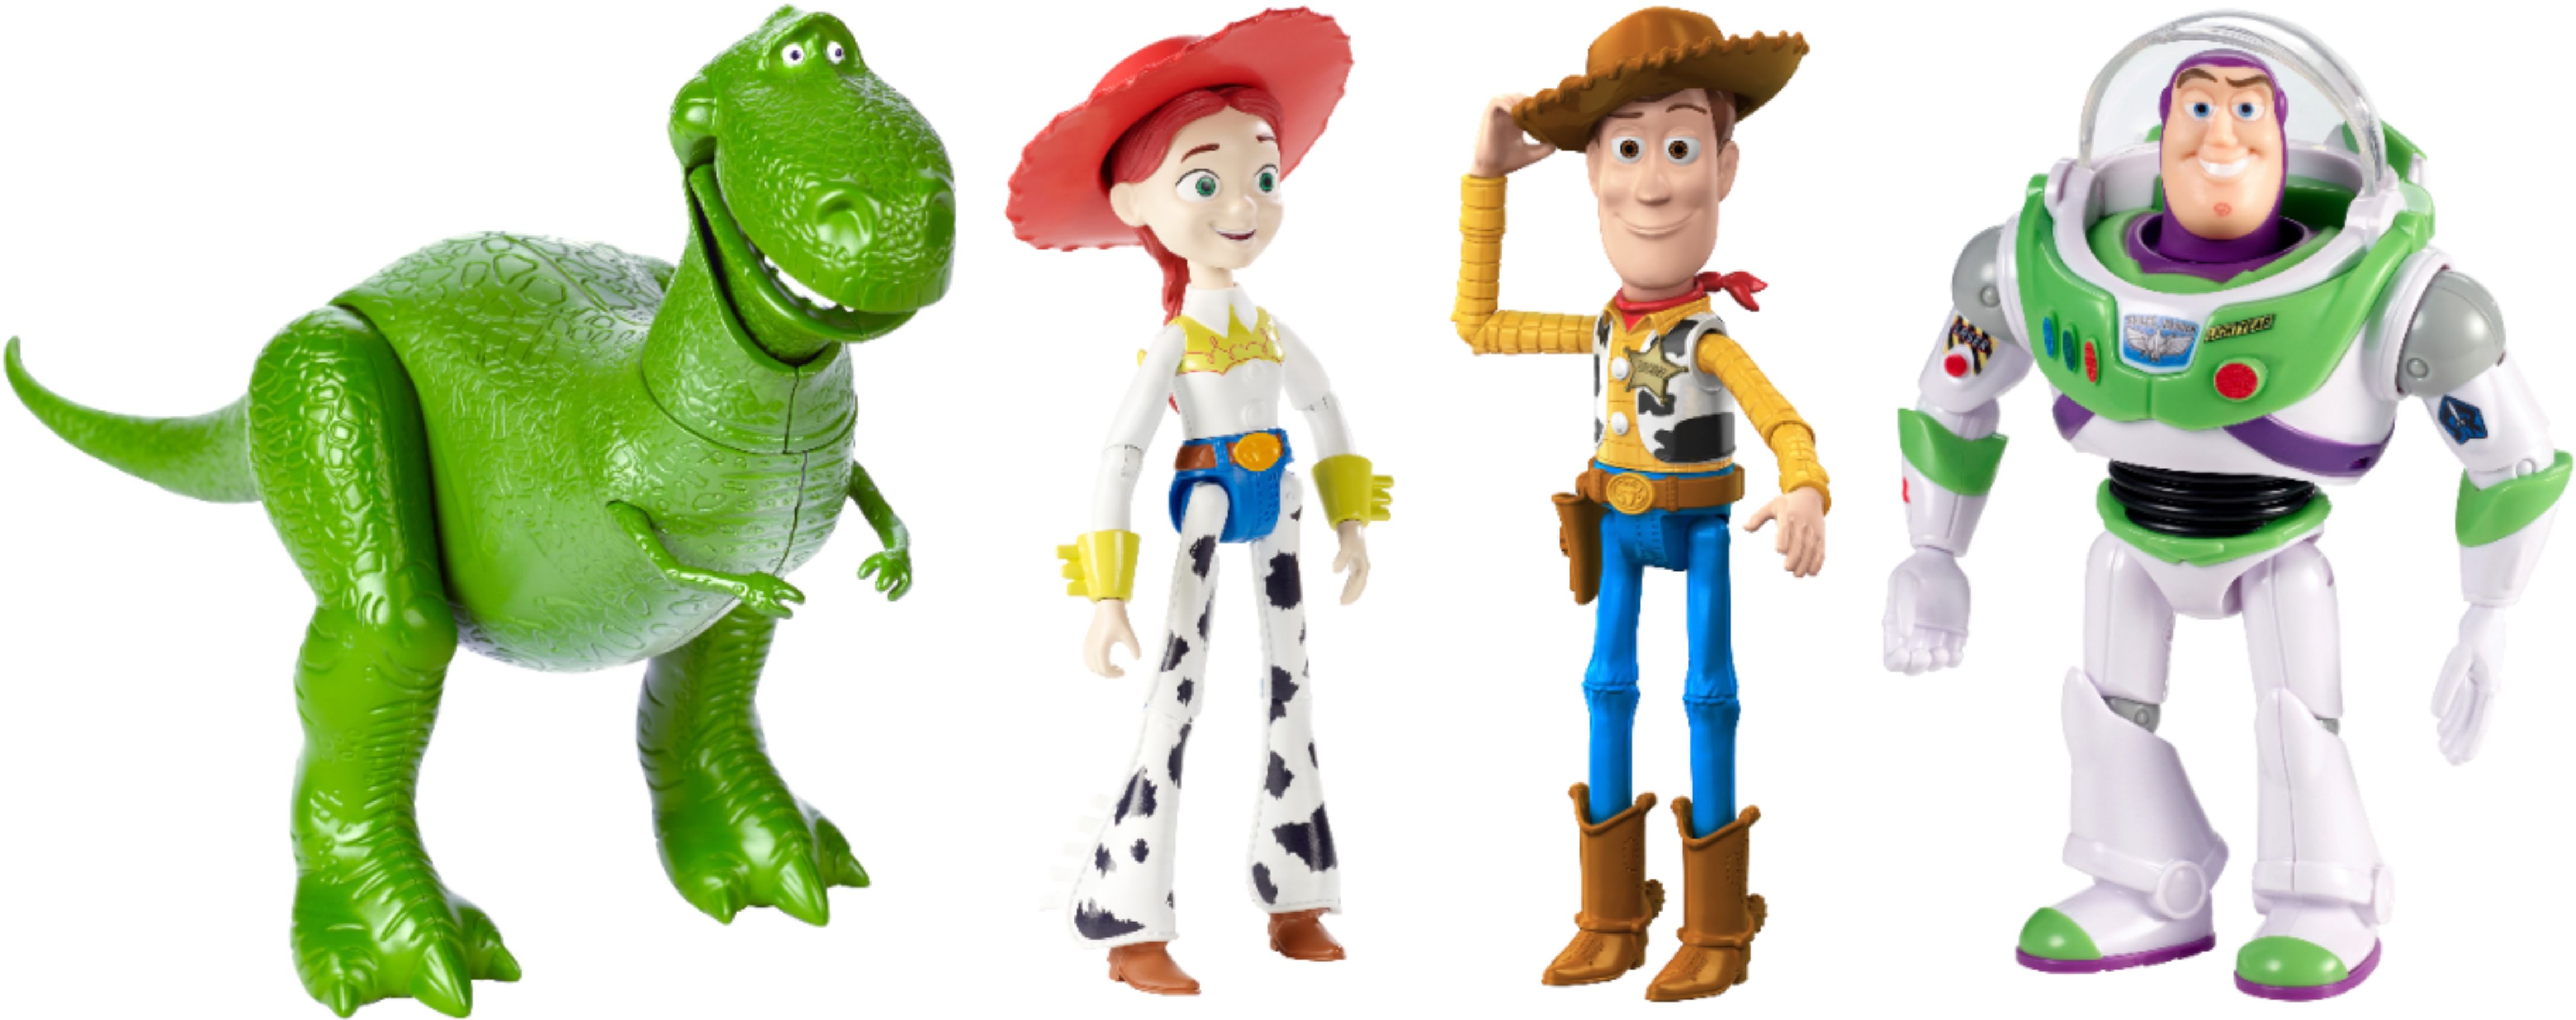 Disney Pixar - Toy Story 4 Figure - Styles May Vary